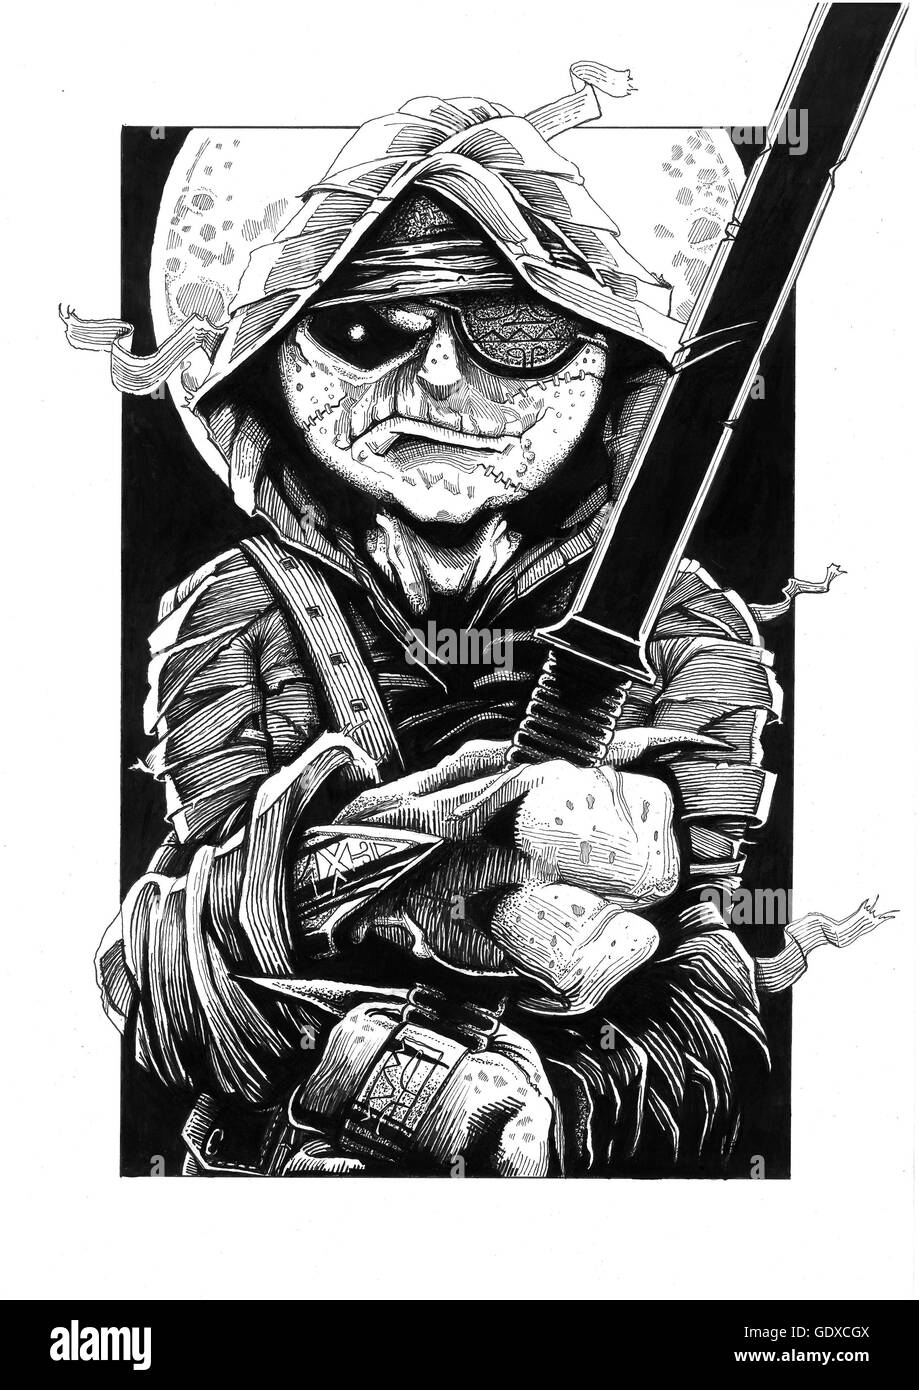 Fierce angry dressed up samurai warrior holding  sword wearing dark glasses  drawing illustration Stock Photo